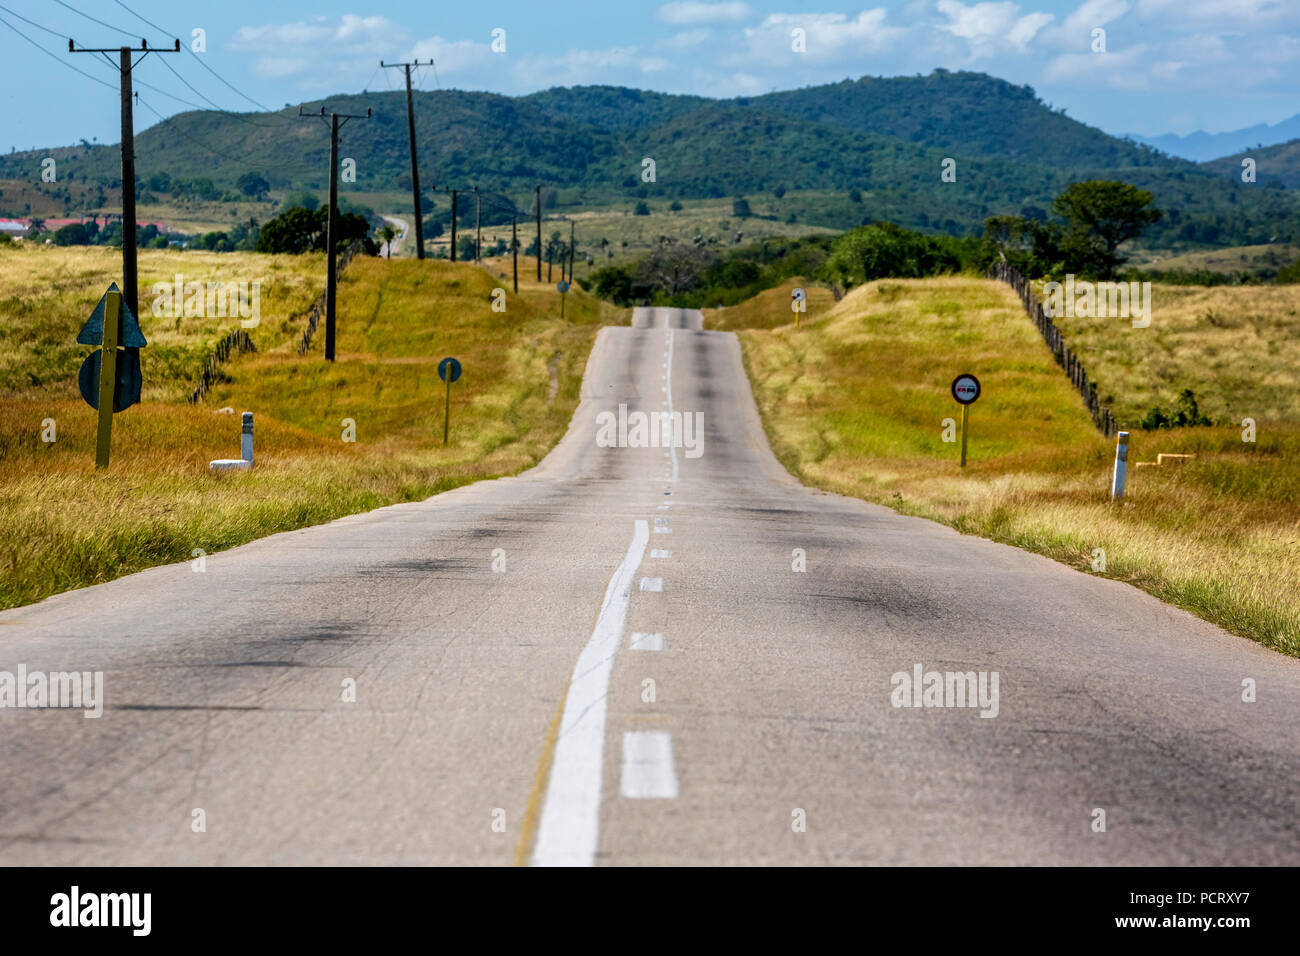 Flackern Autobahn zwischen Santa Clara und Trinidad Ingenios, Tal Valle de los Ingenios, Valle Ingenios, Kuba, Mittelamerika Stockfoto